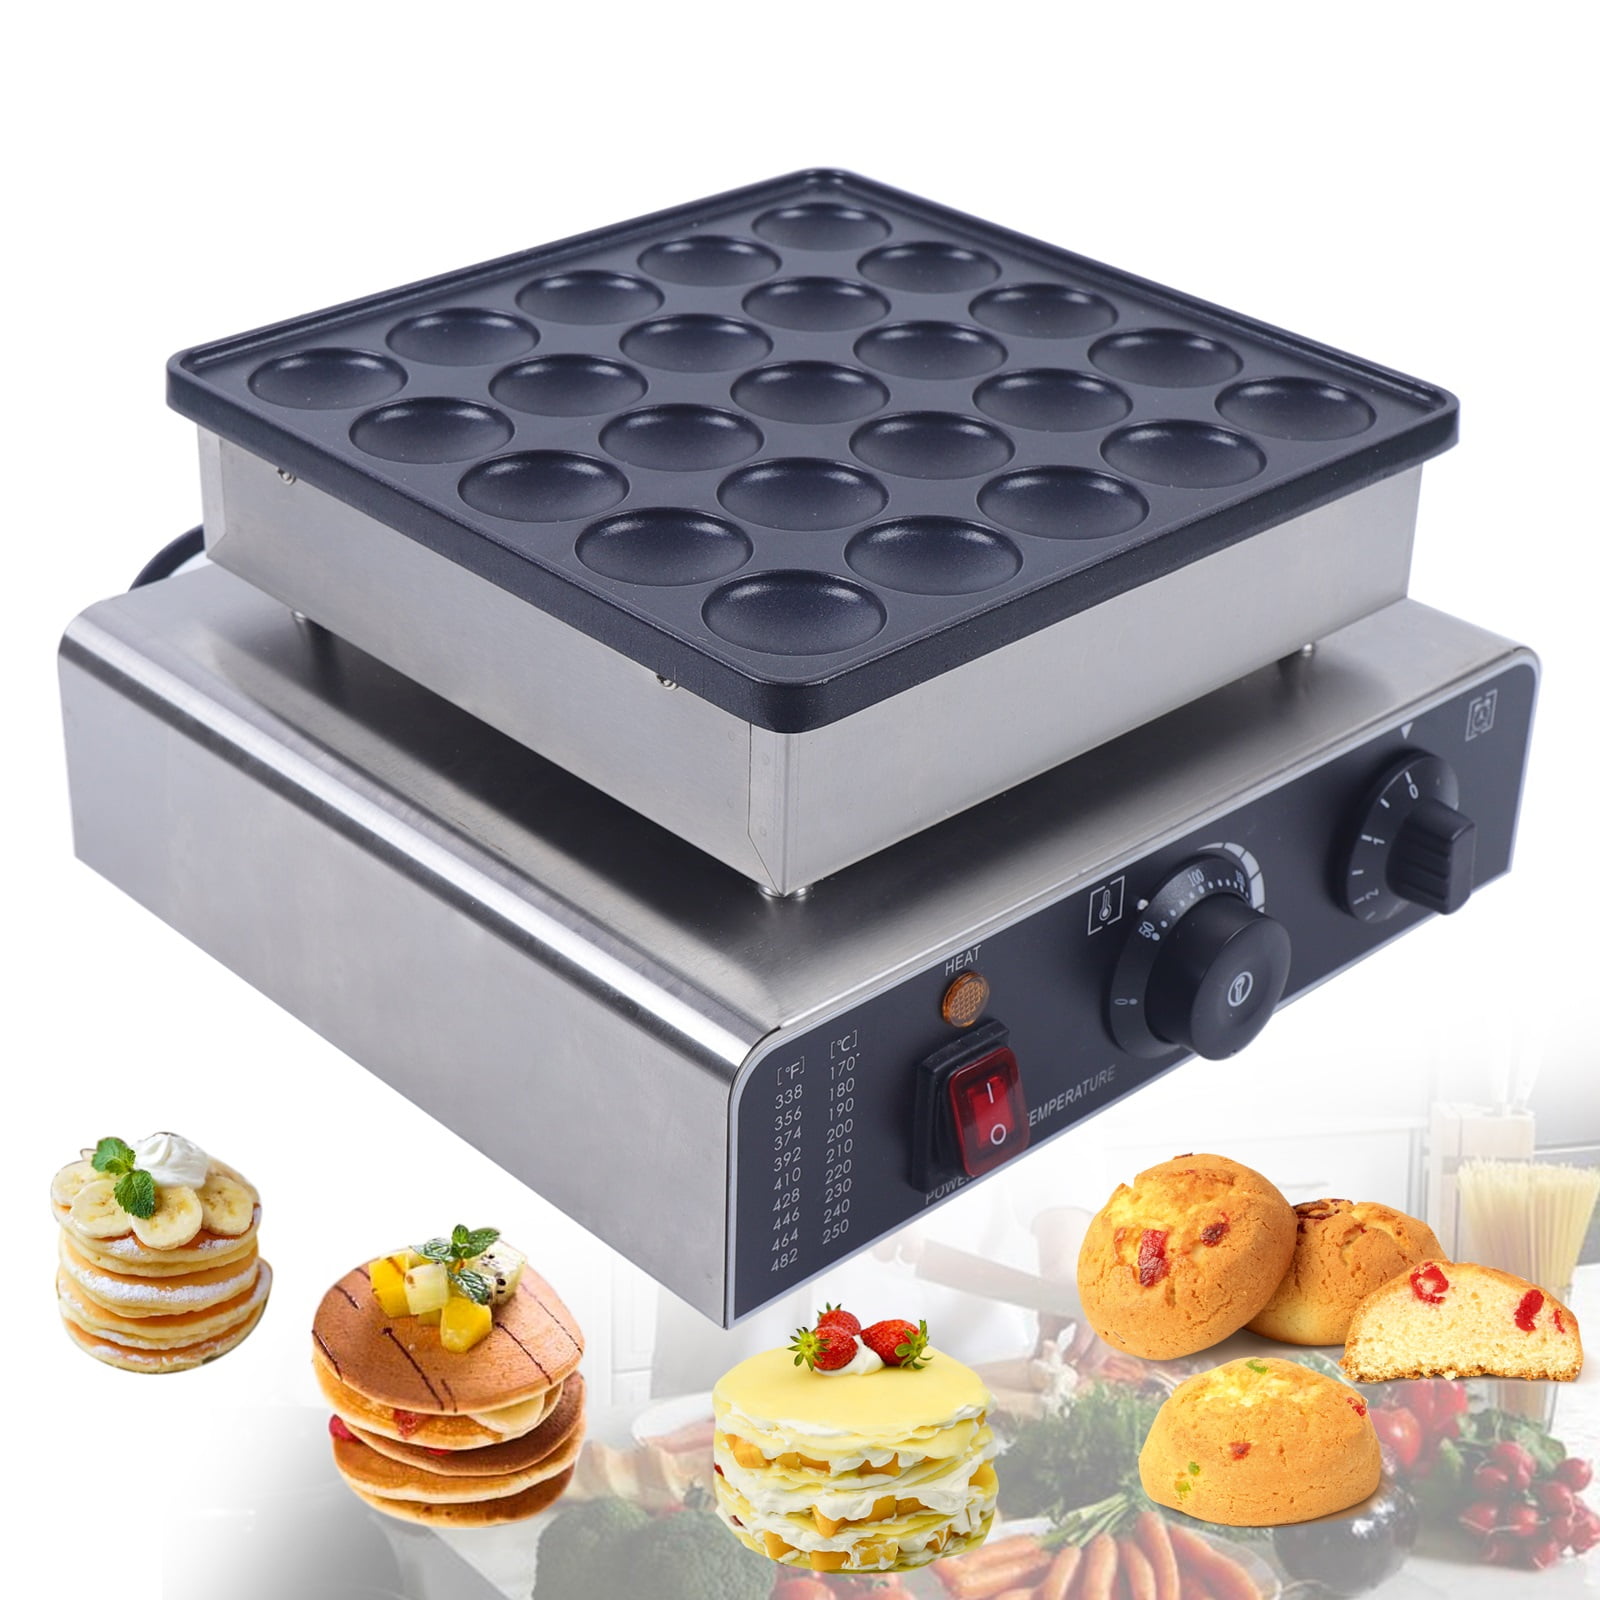 Mini Waffle Iron – Pamcakes' Pancakes